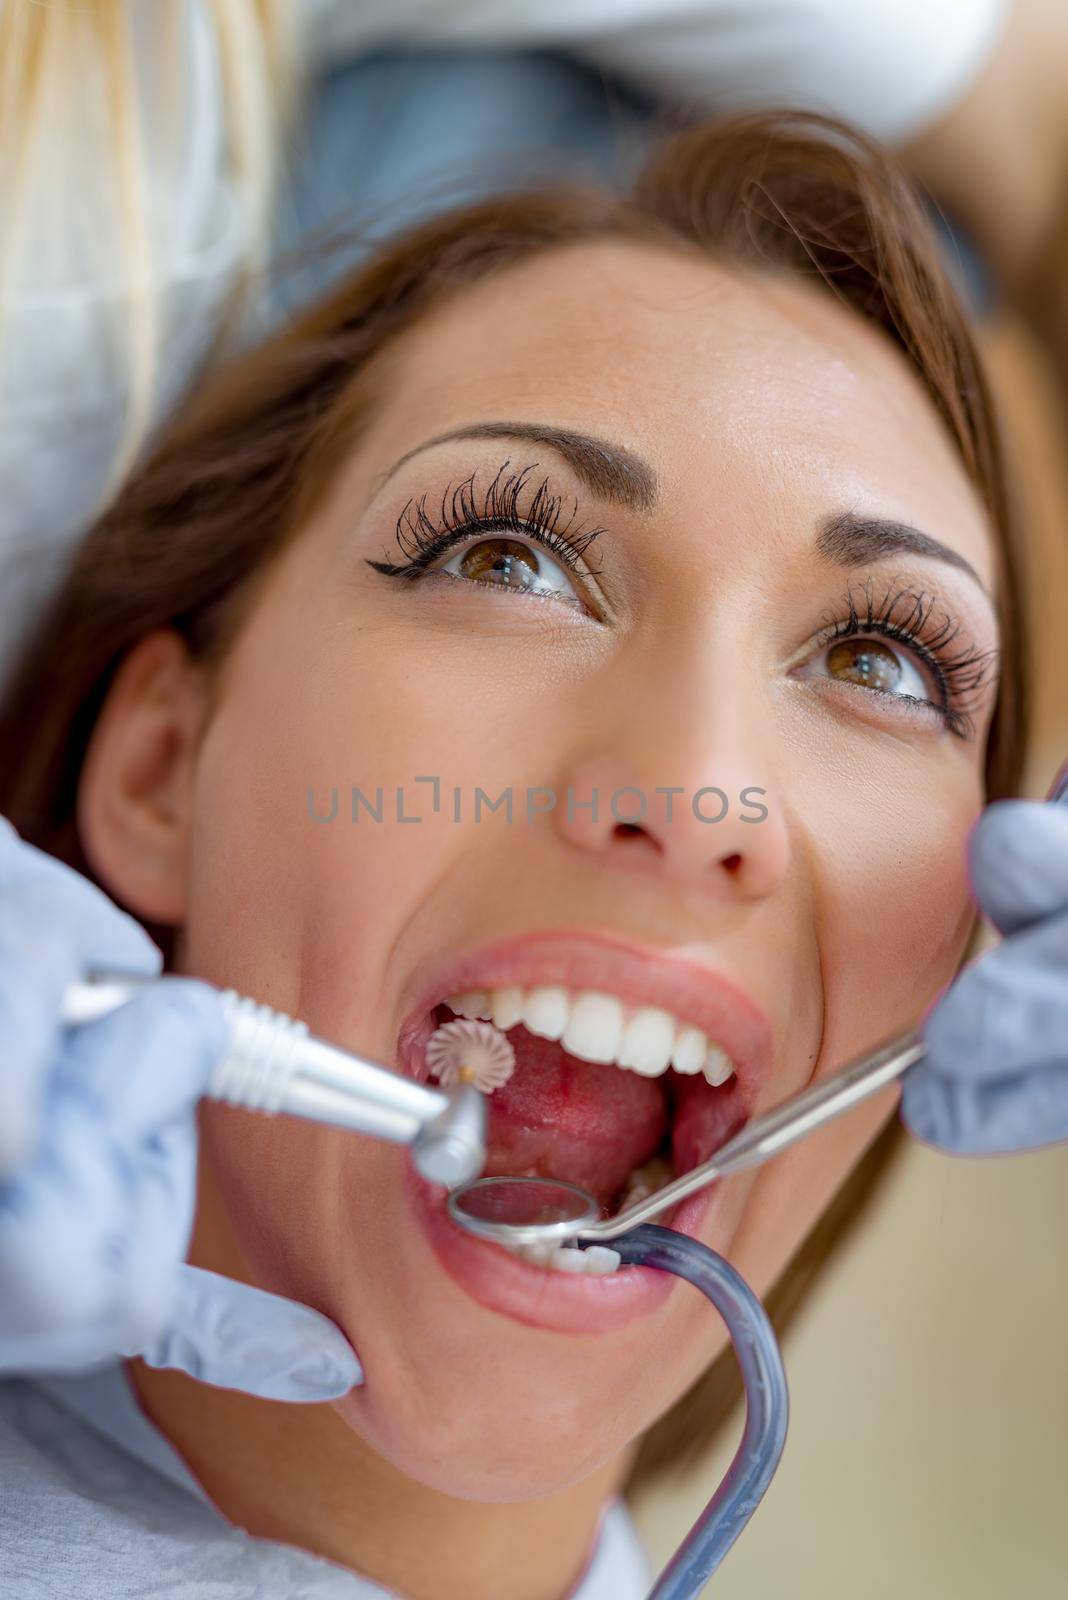 Dentist Treatment  by MilanMarkovic78